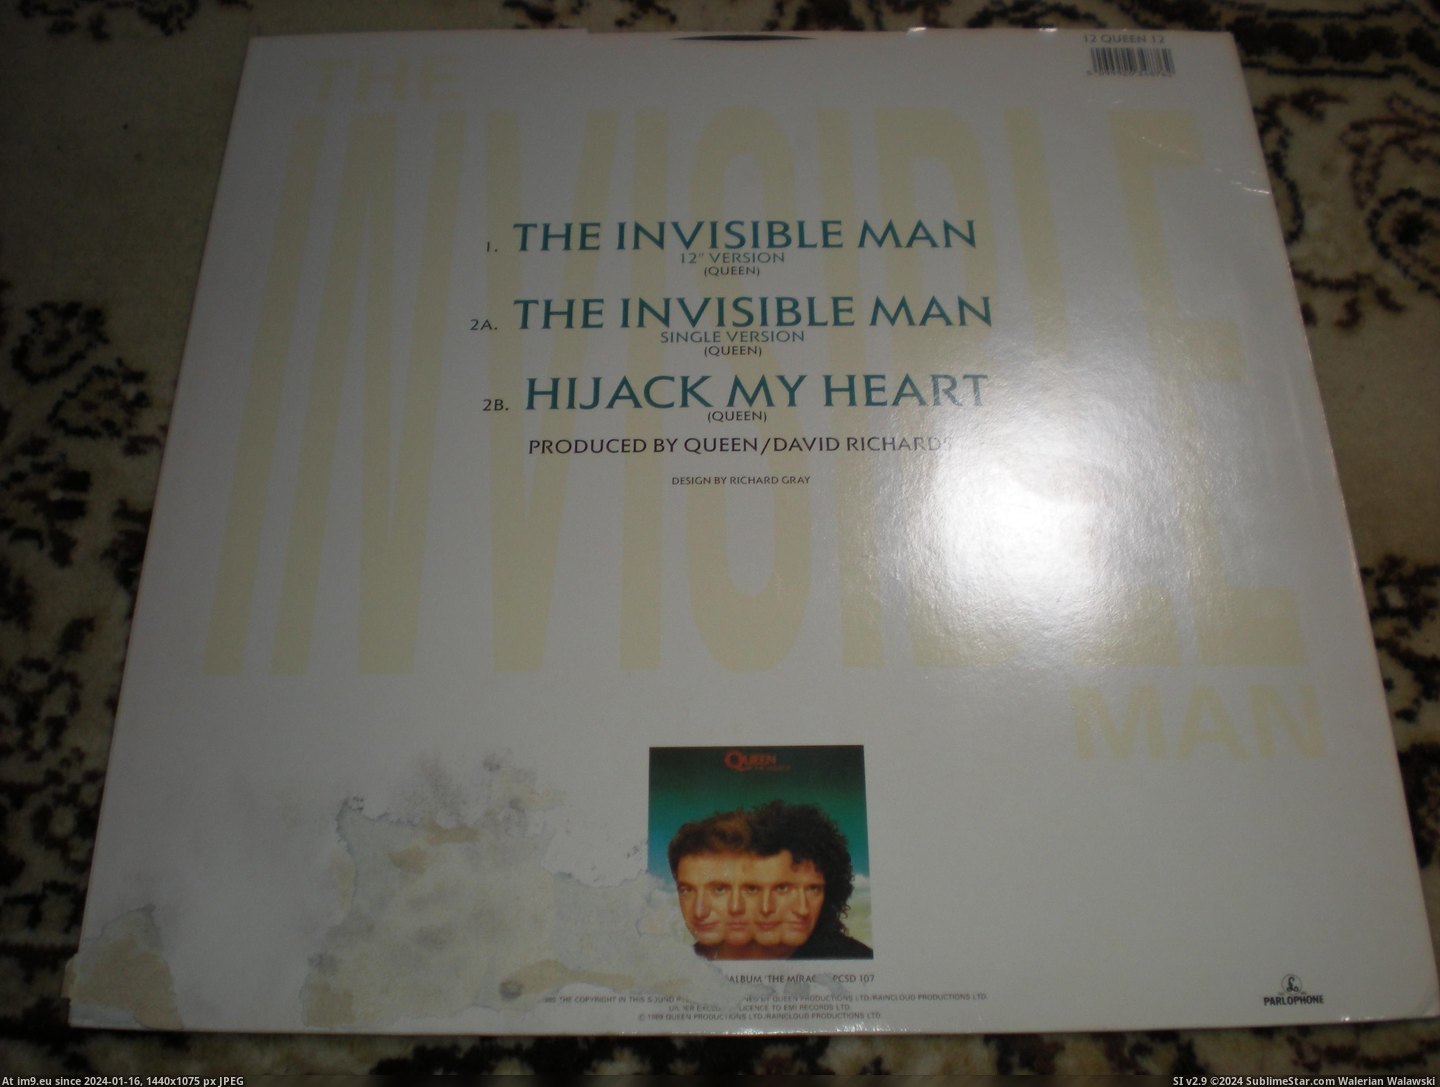 #Man #Invisible #Queen QUEEN Invisible Man 2 Pic. (Obraz z album new 1))